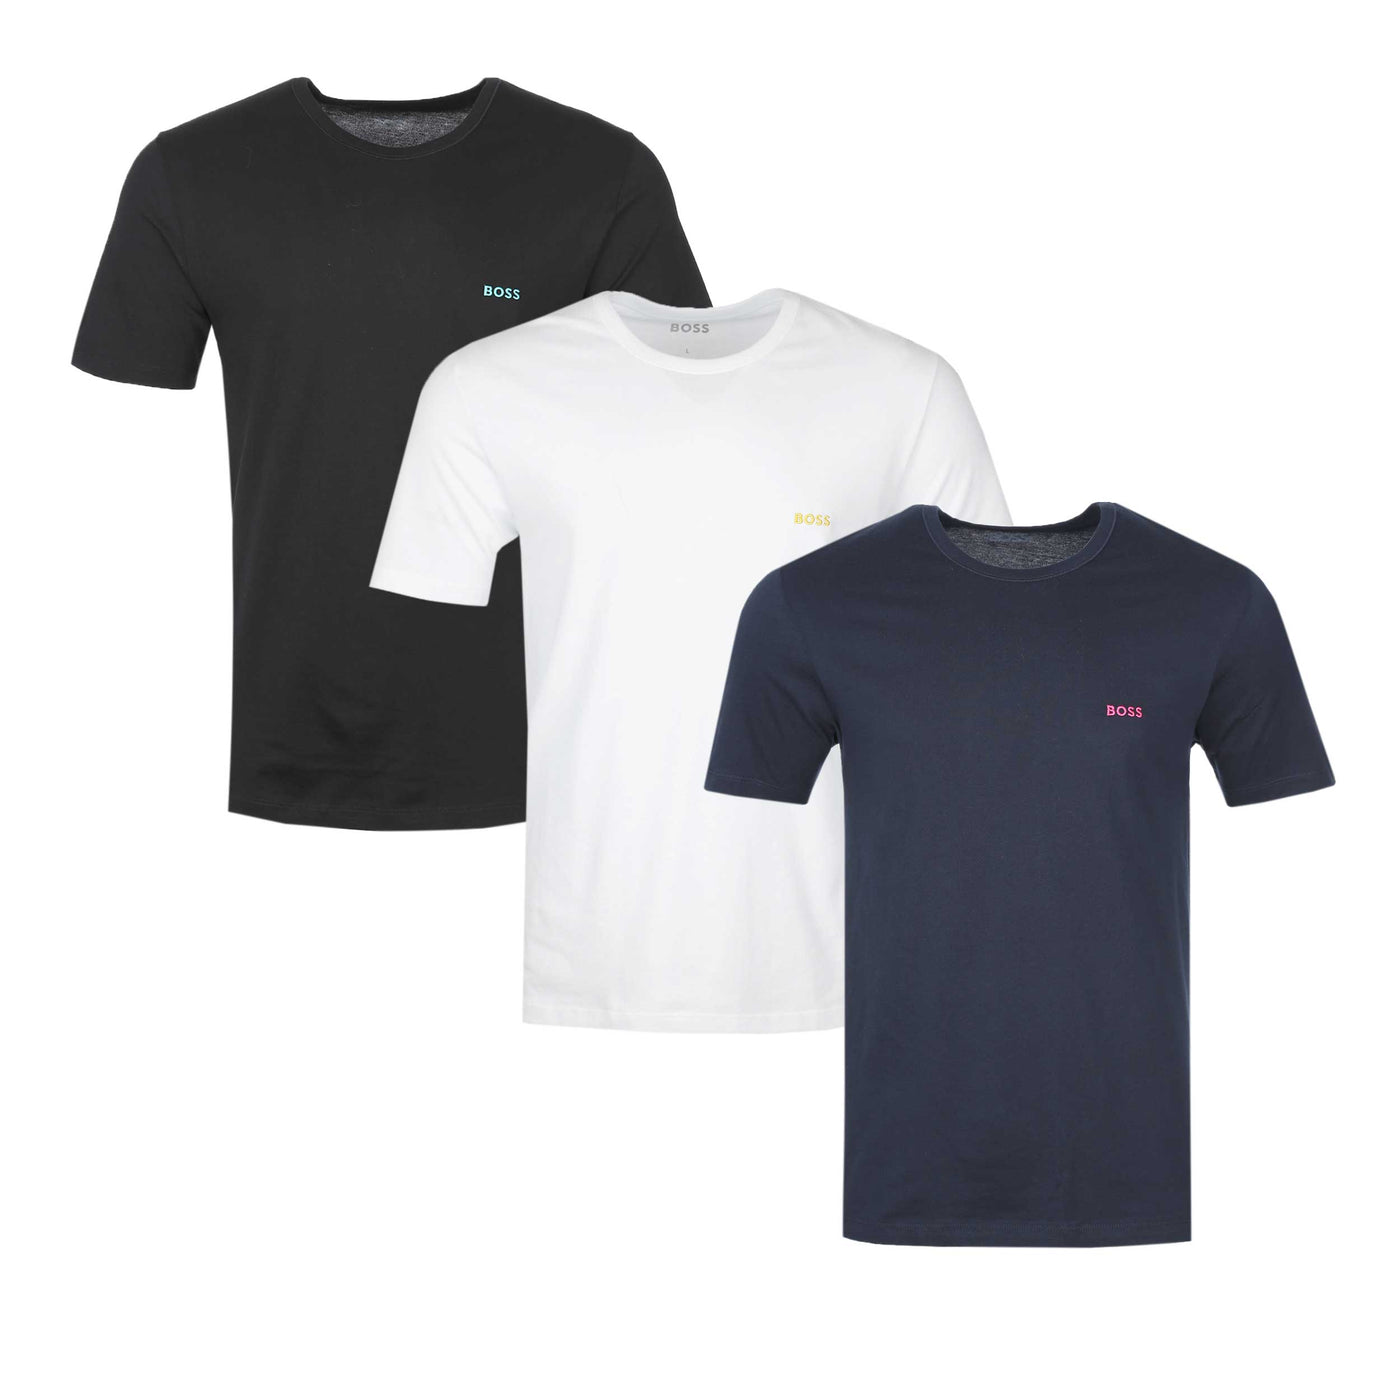 BOSS TShirtRN 3P Classic T-Shirt in Black, White & Navy